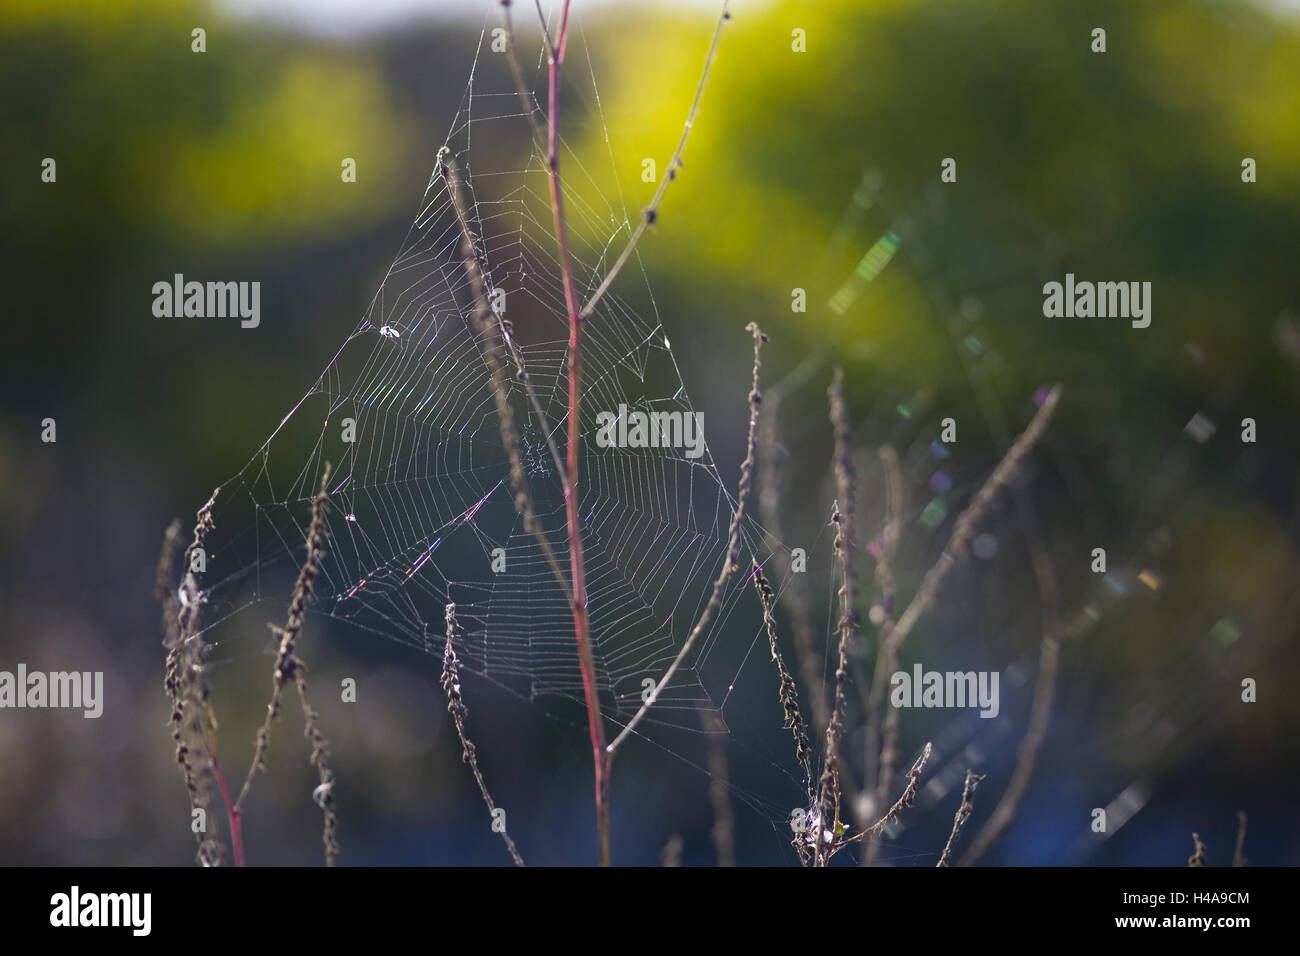 Spiderweb between autumn shrubs, Stock Photo